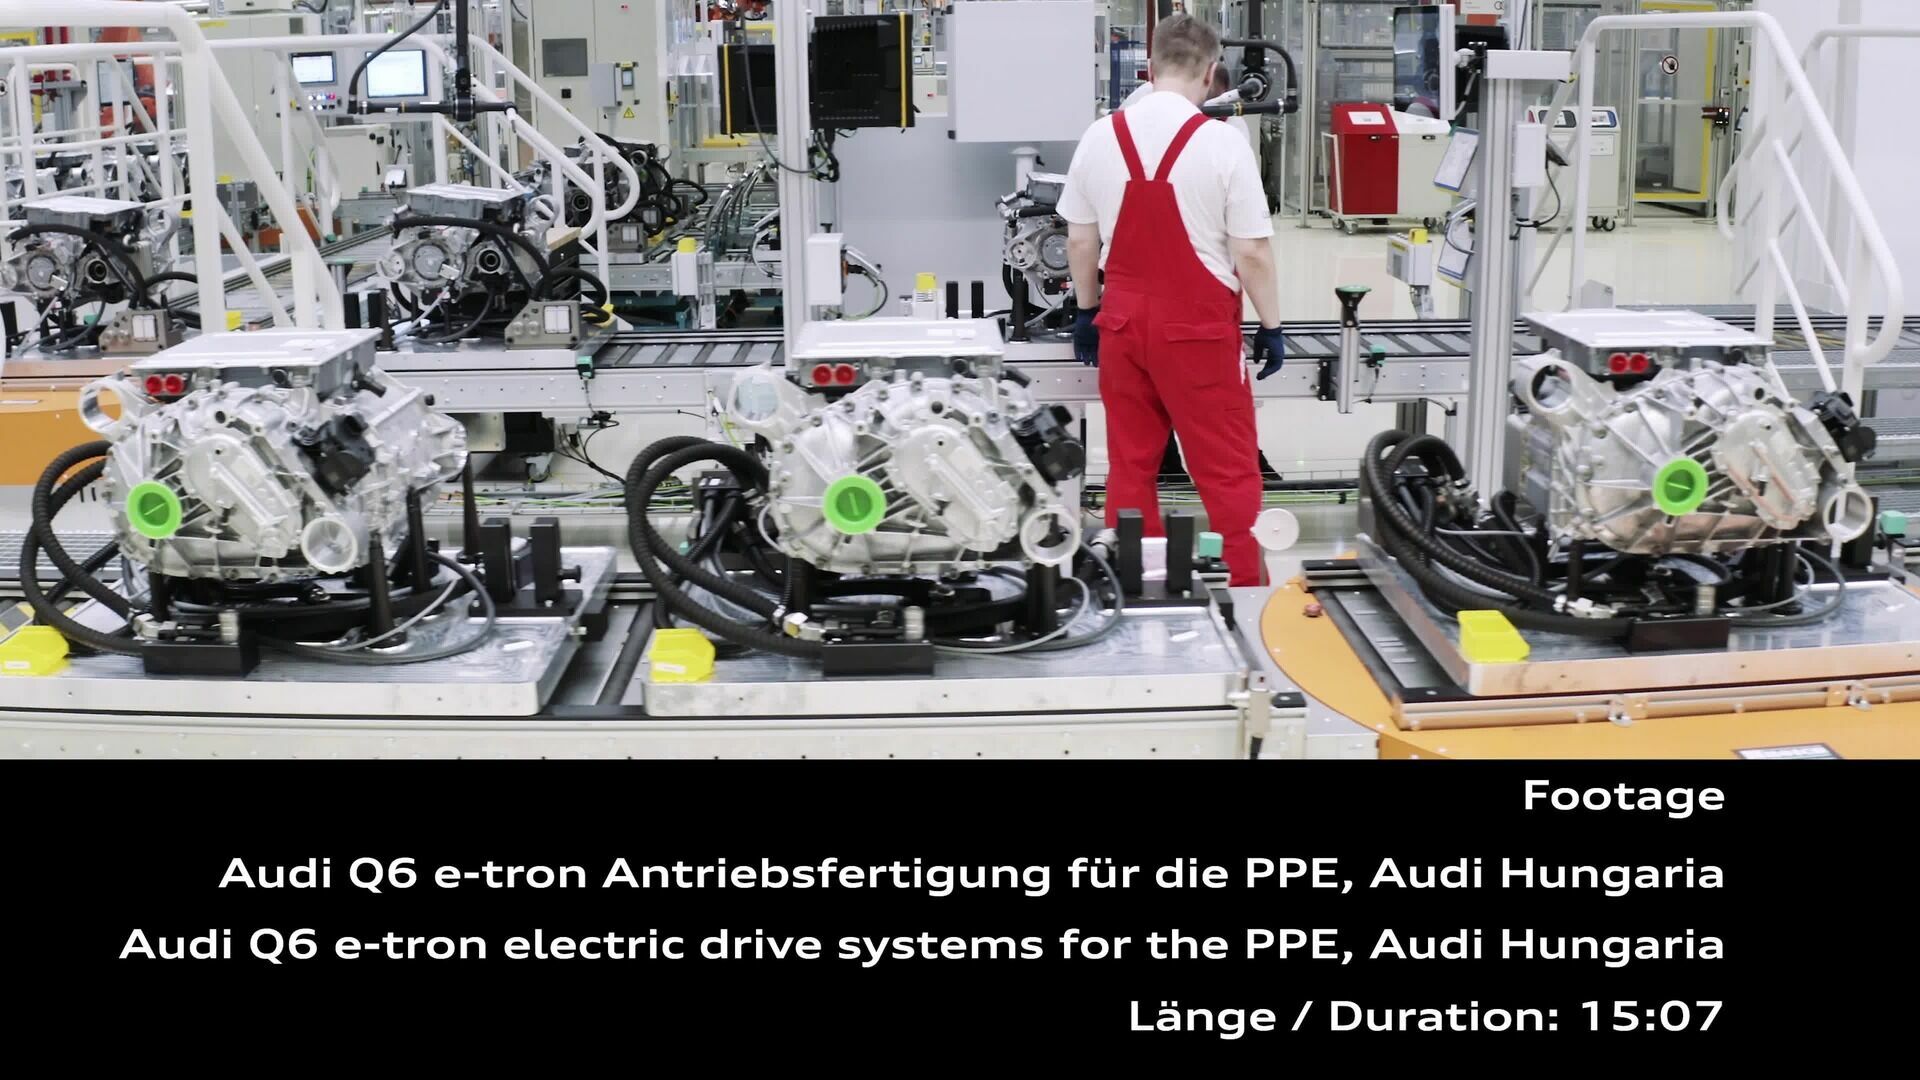 Audi Q6 e-tron electric drive systems production at Győr site – Footage